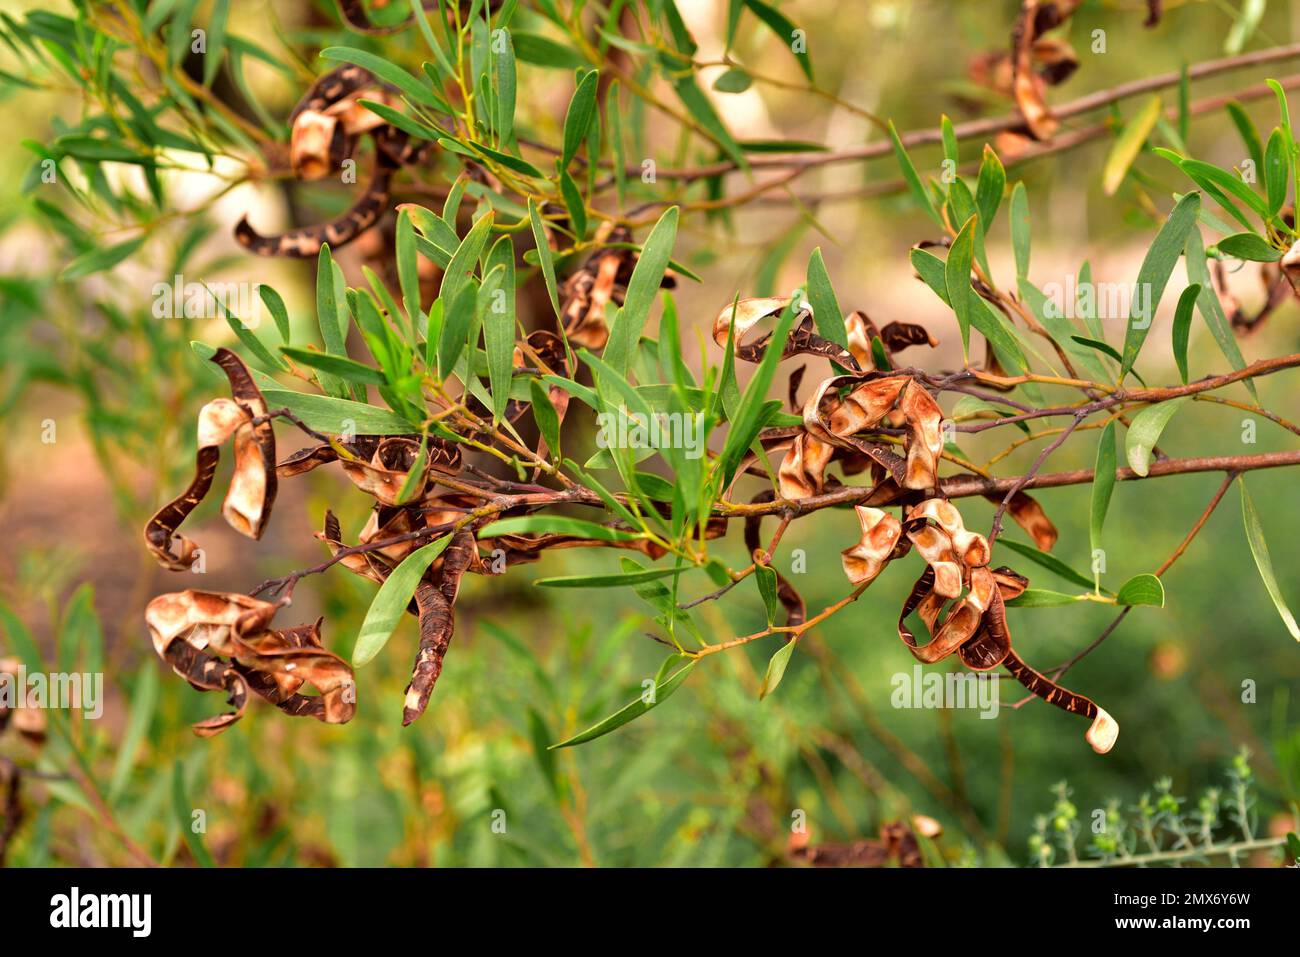 Mulga (Acacia aneura) is a shrub or small tree native to arid regions of Australia. Fruits detail. Stock Photo